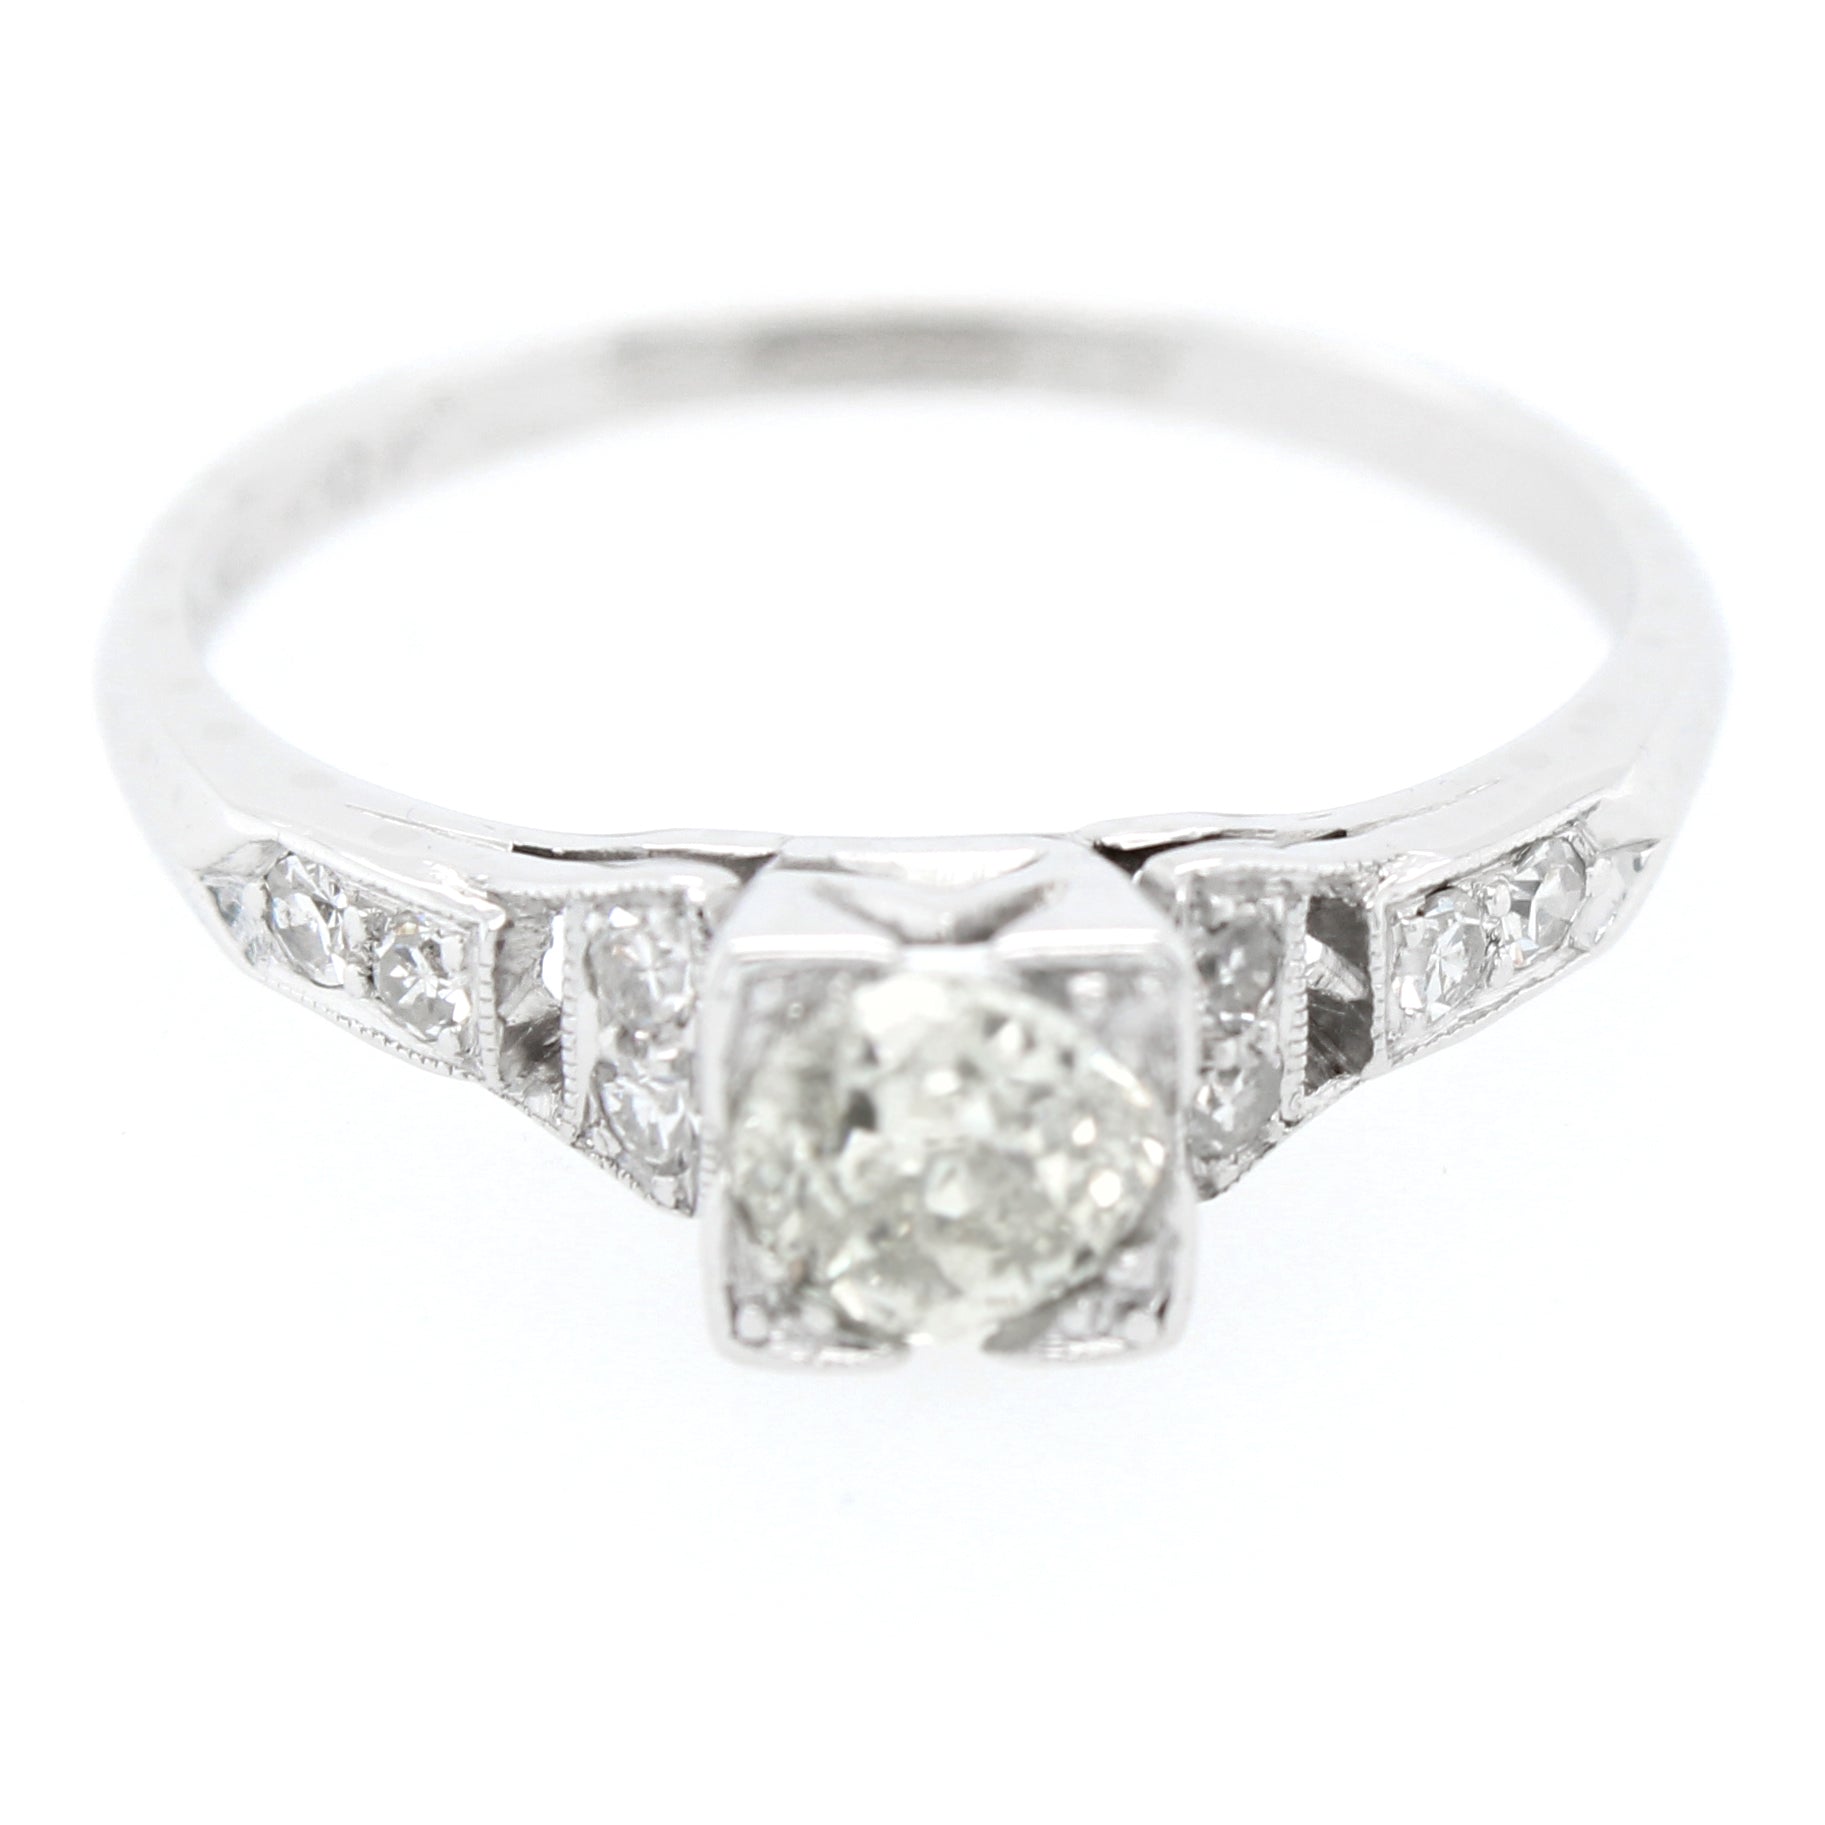 Antique 0.65ctw Diamond Cathedral Set Engagement Ring in Platinum | Size 5.50